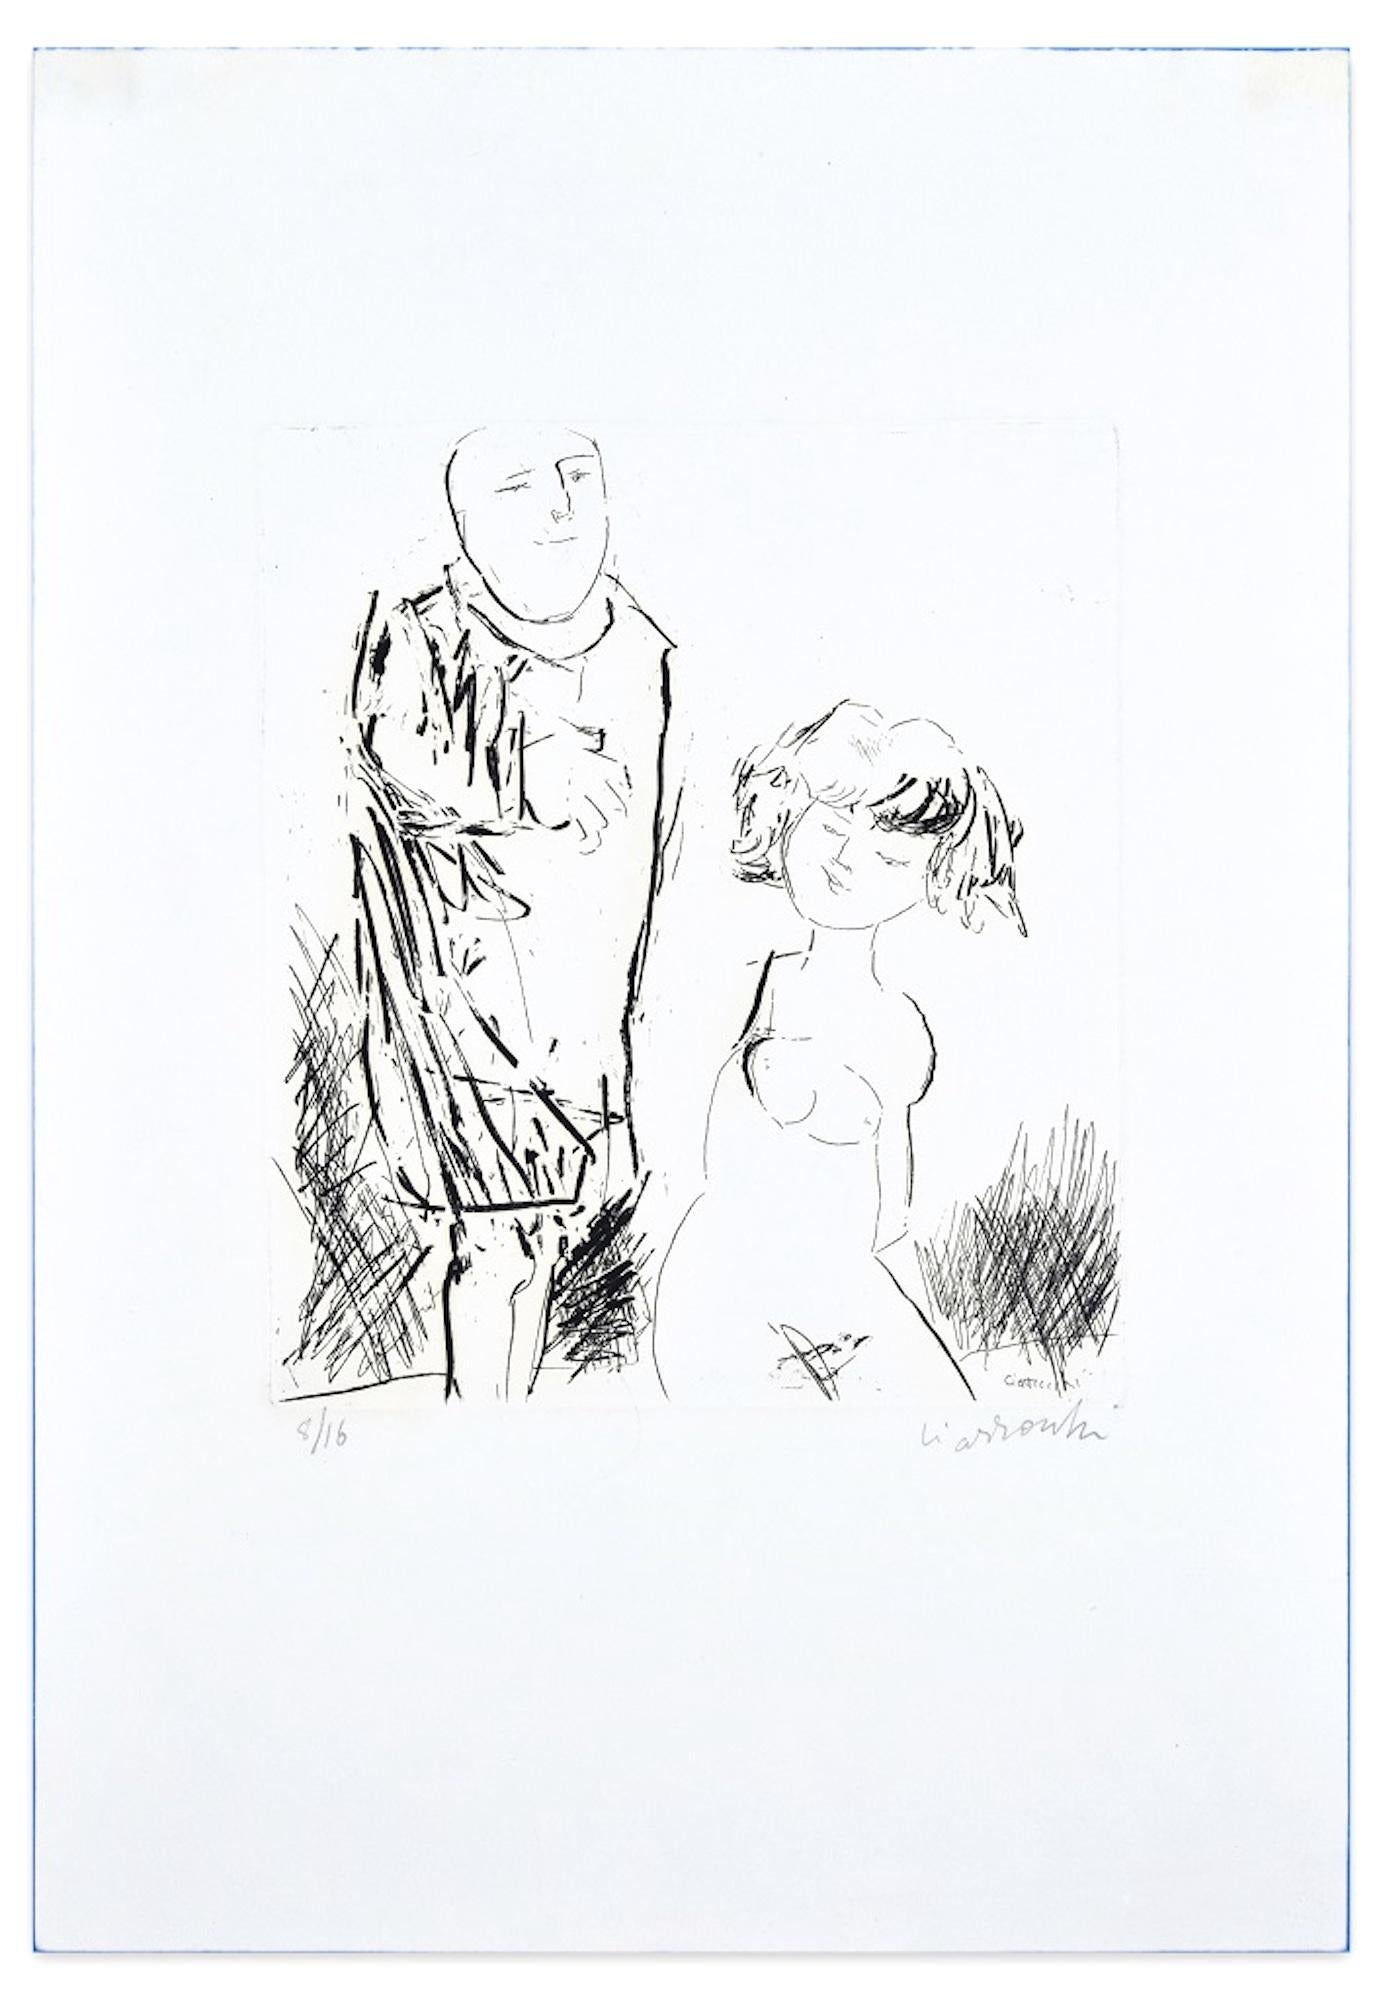 The Couple - Original Etching by by A. Ciarrocchi - 1970 ca. - Print by Arnoldo Ciarrocchi